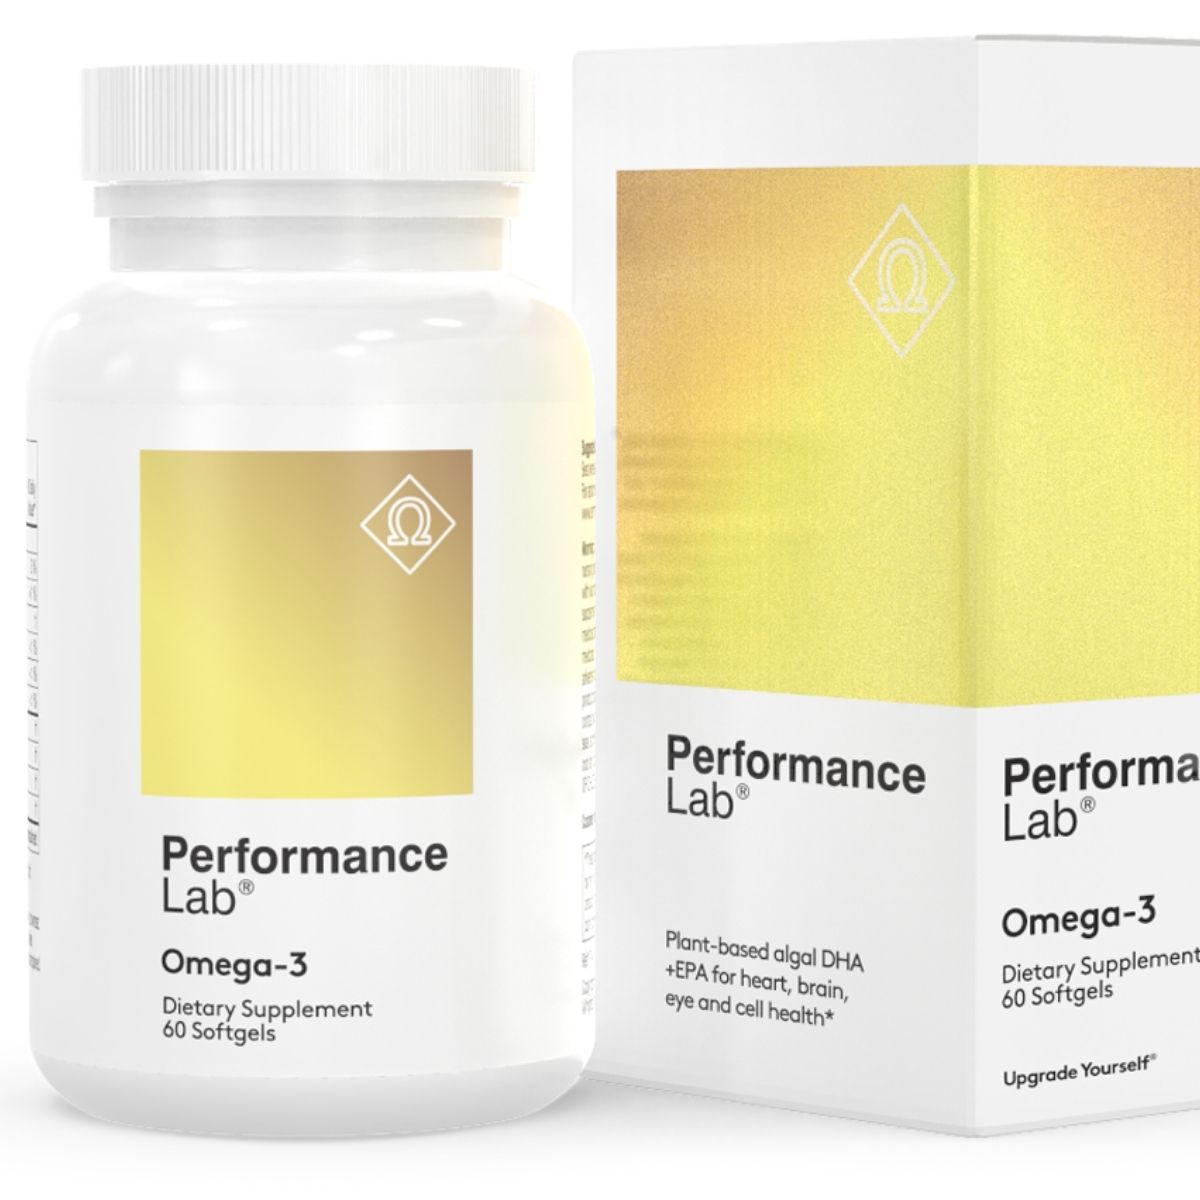 Performance Lab Omega-3 supplements.
